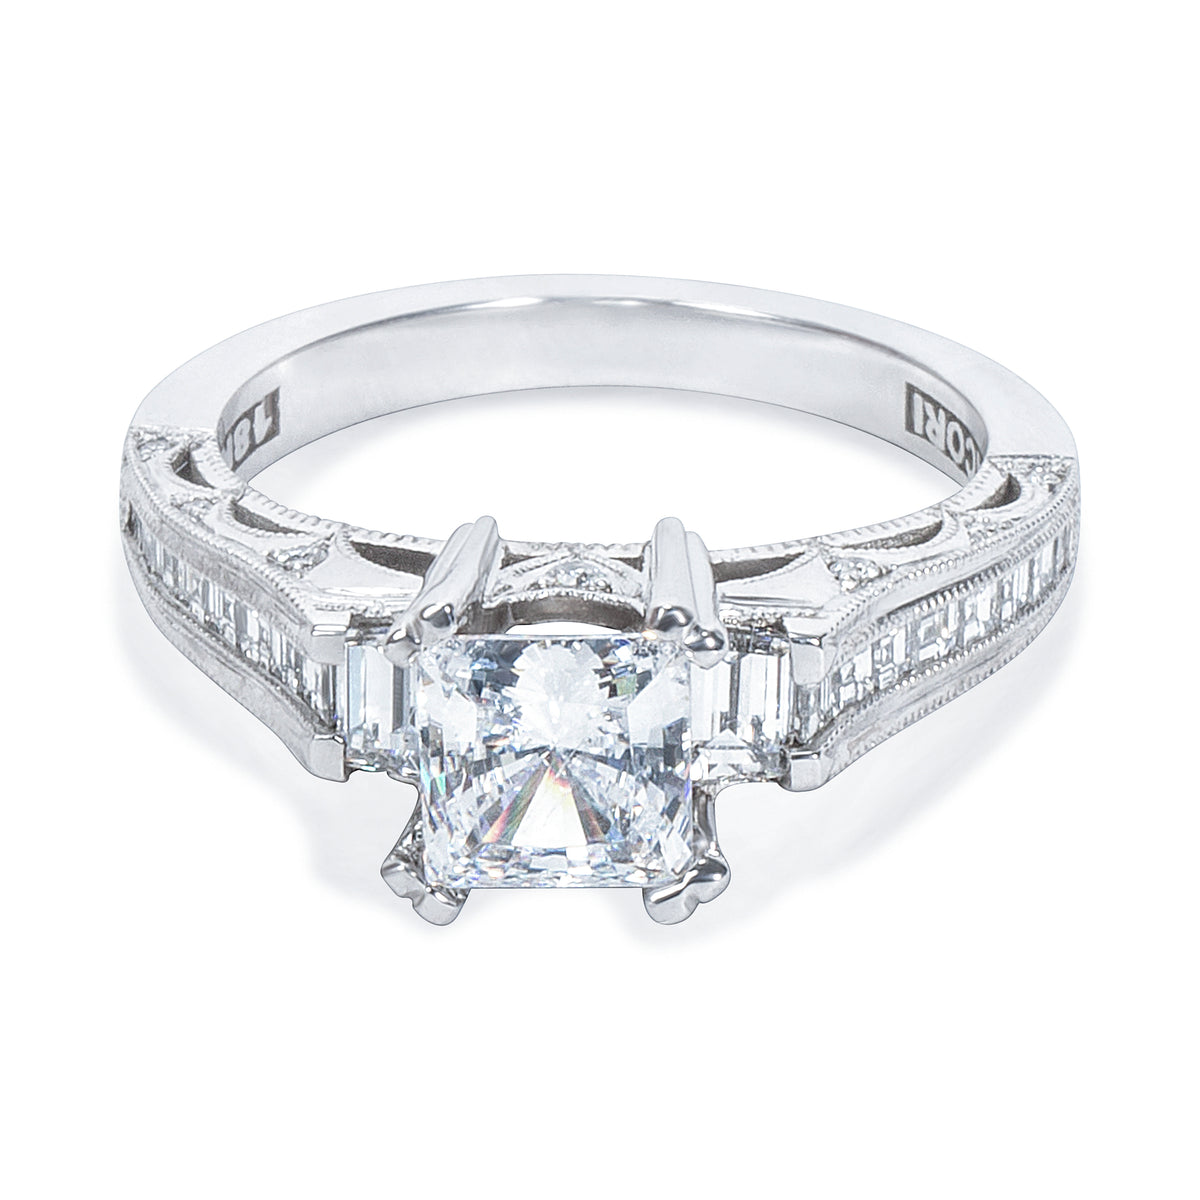 BRAND NEW Tacori 3 Stone Engagement Ring Setting in Platinum (3/4 CTW) HT 2509 P